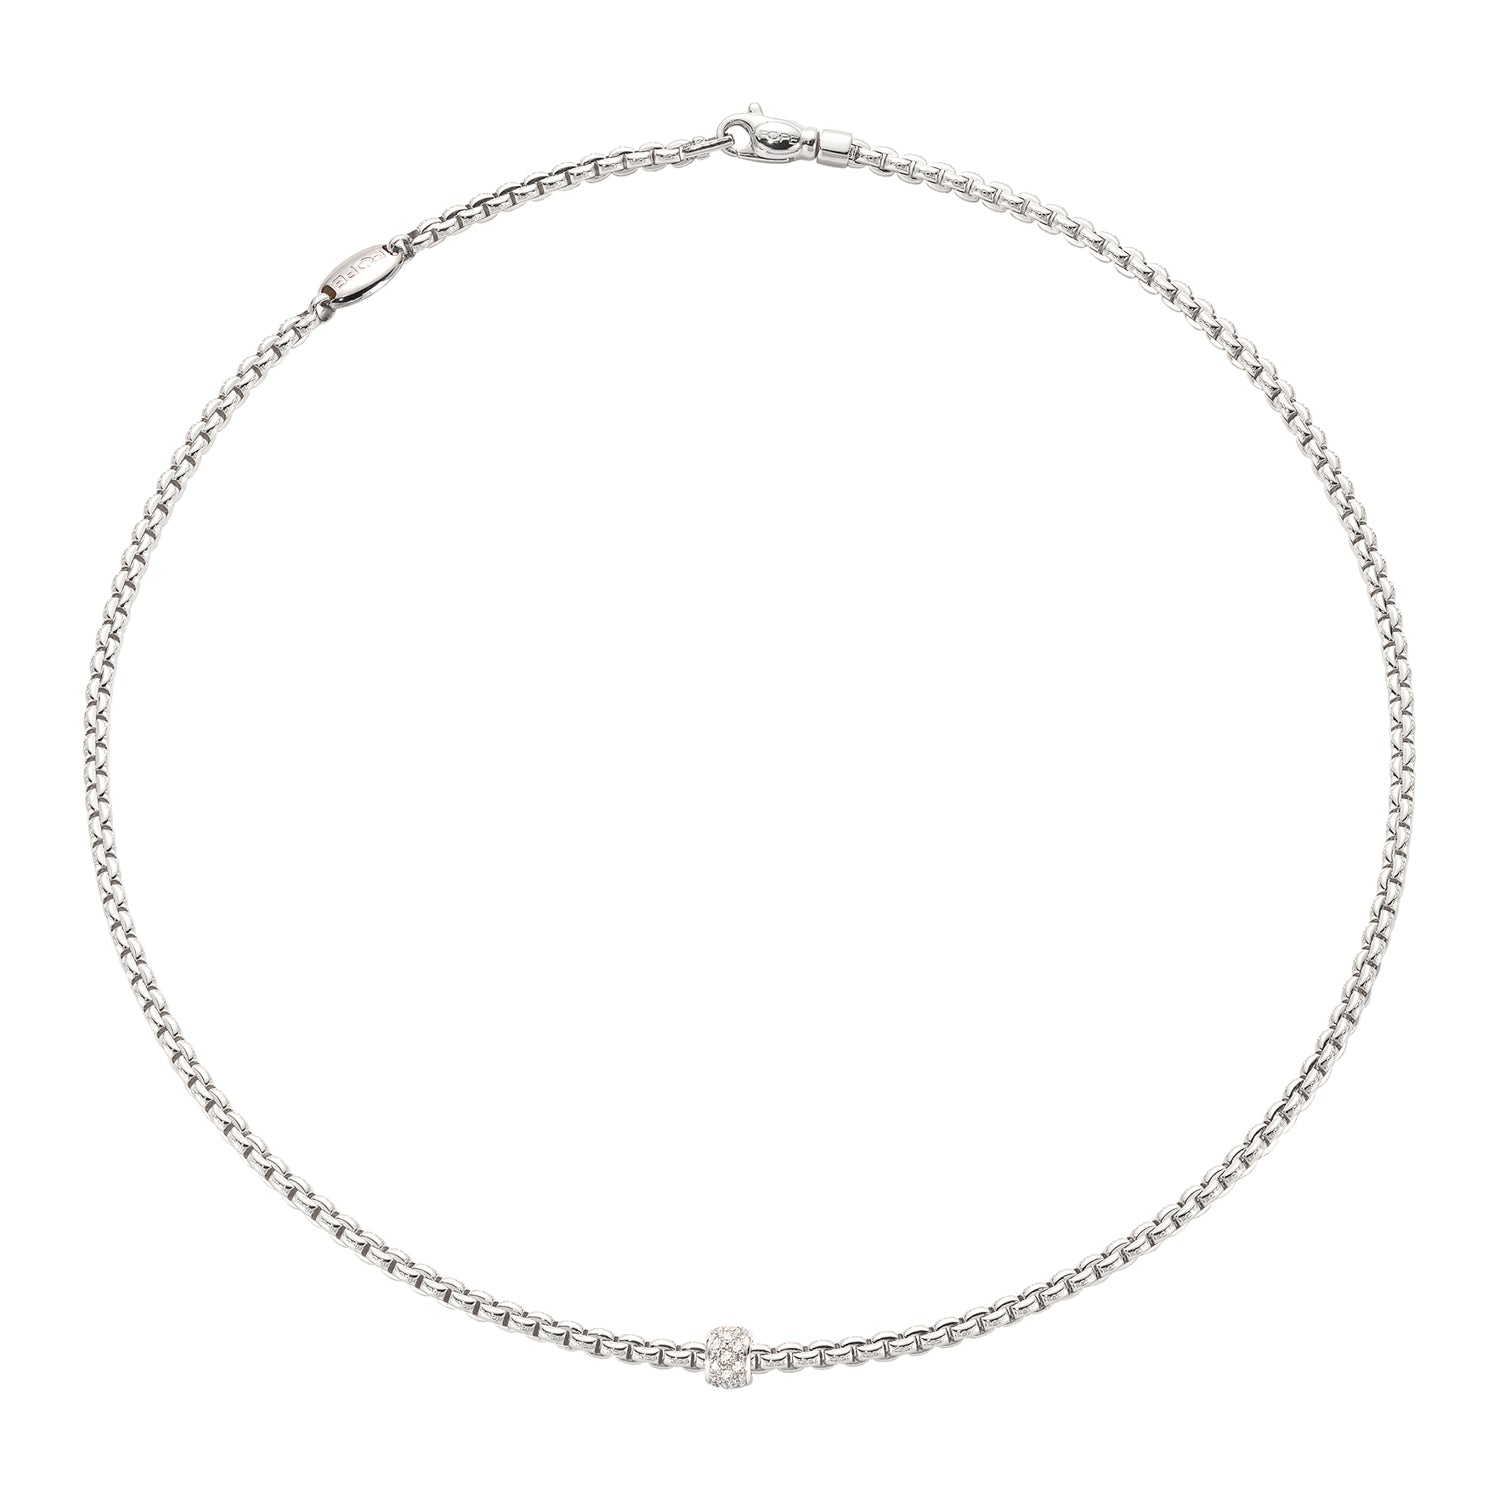 FOPE Necklace 18K white gold with diamonds 0.19ct Length 45cm EKA